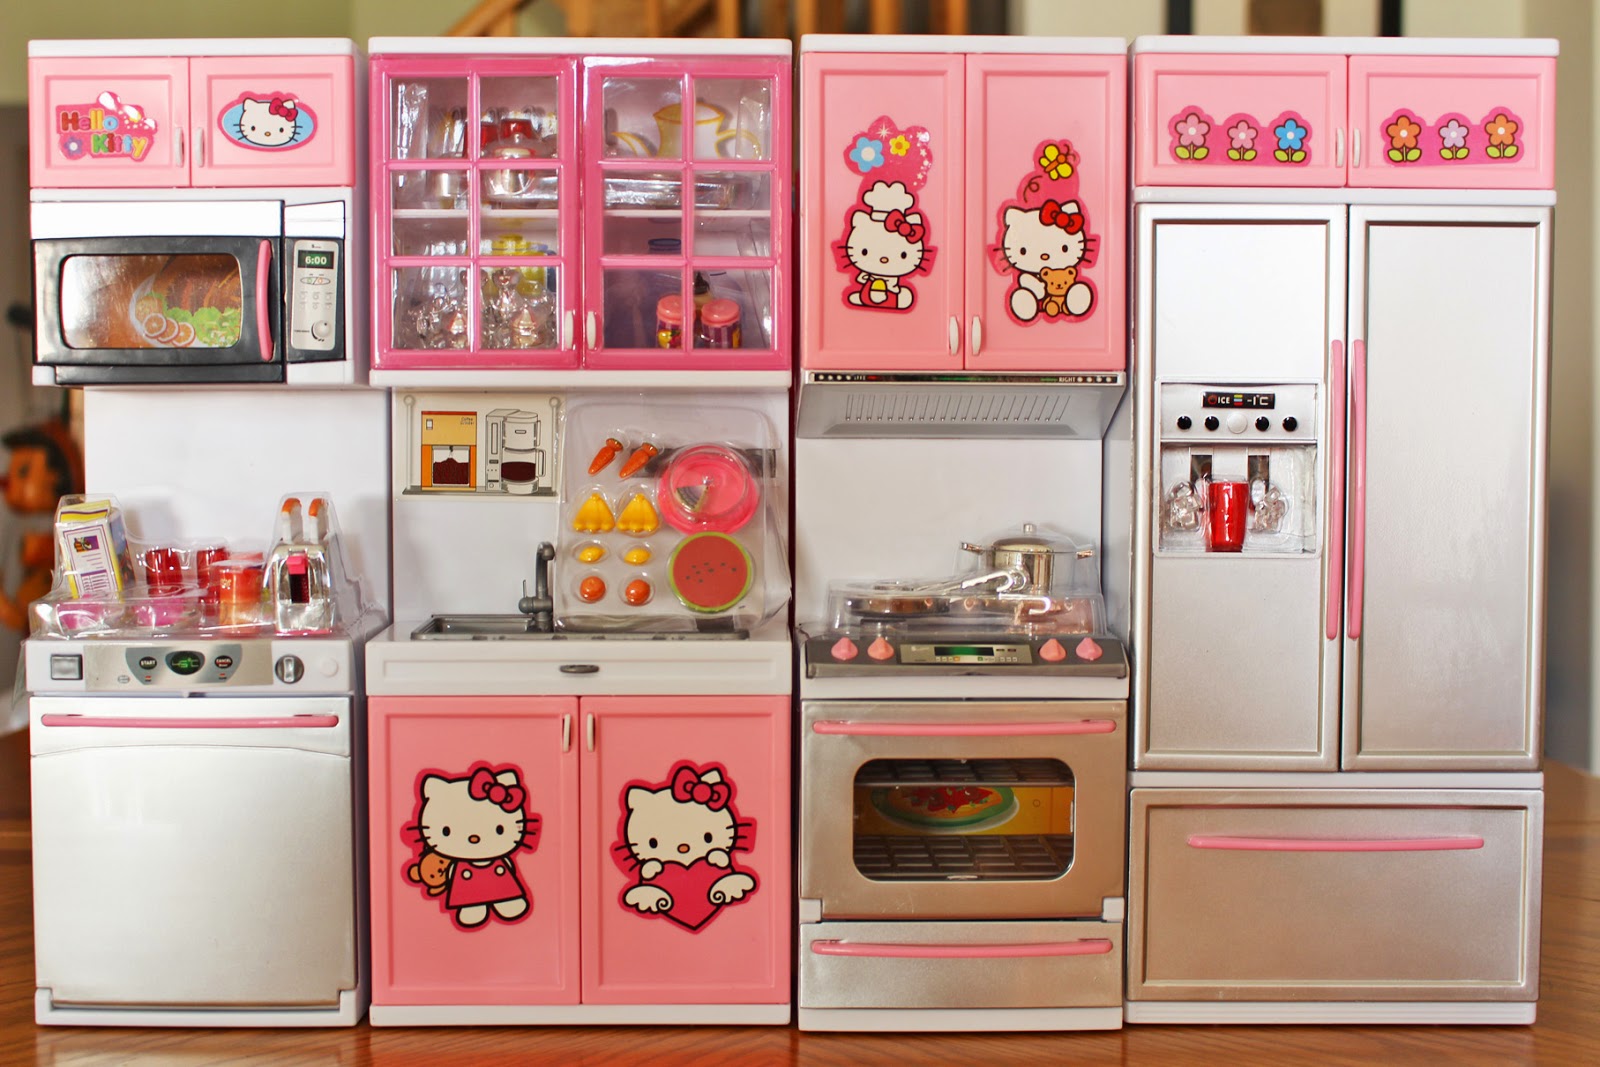  Doll Kitchen Playset for Kids, My Modern Mini Kitchen